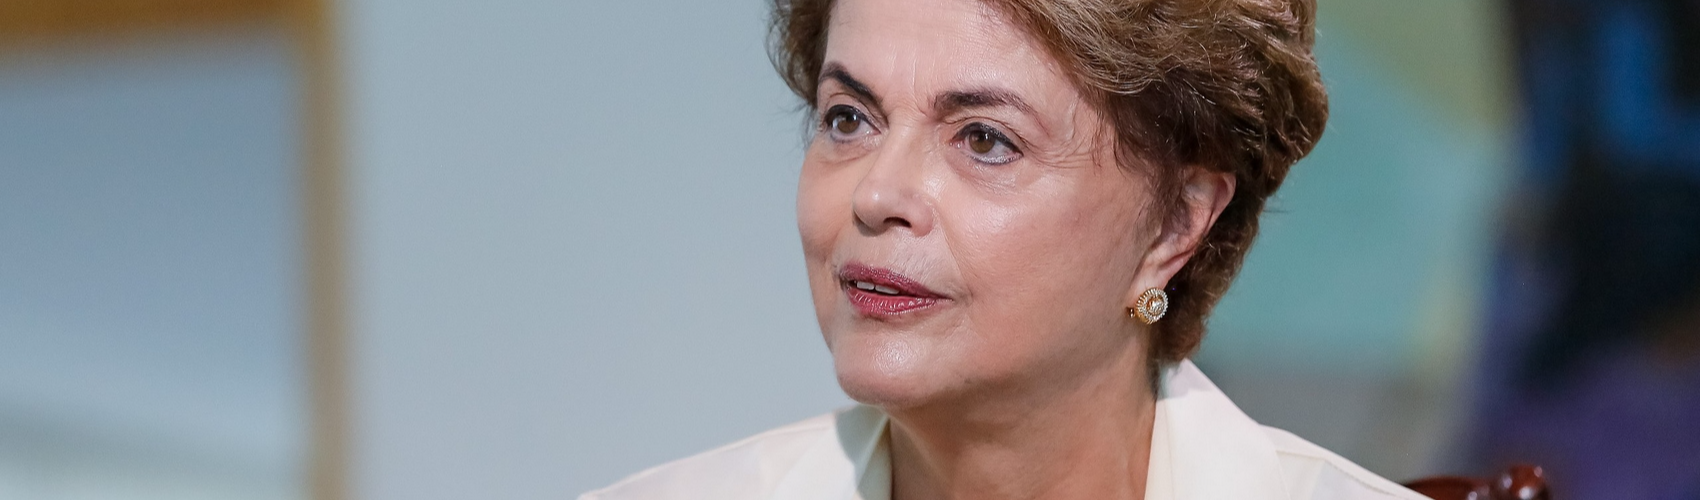 Confirmada no Banco do Brics, Dilma pode garantir valiosos recursos a projetos do Brasil